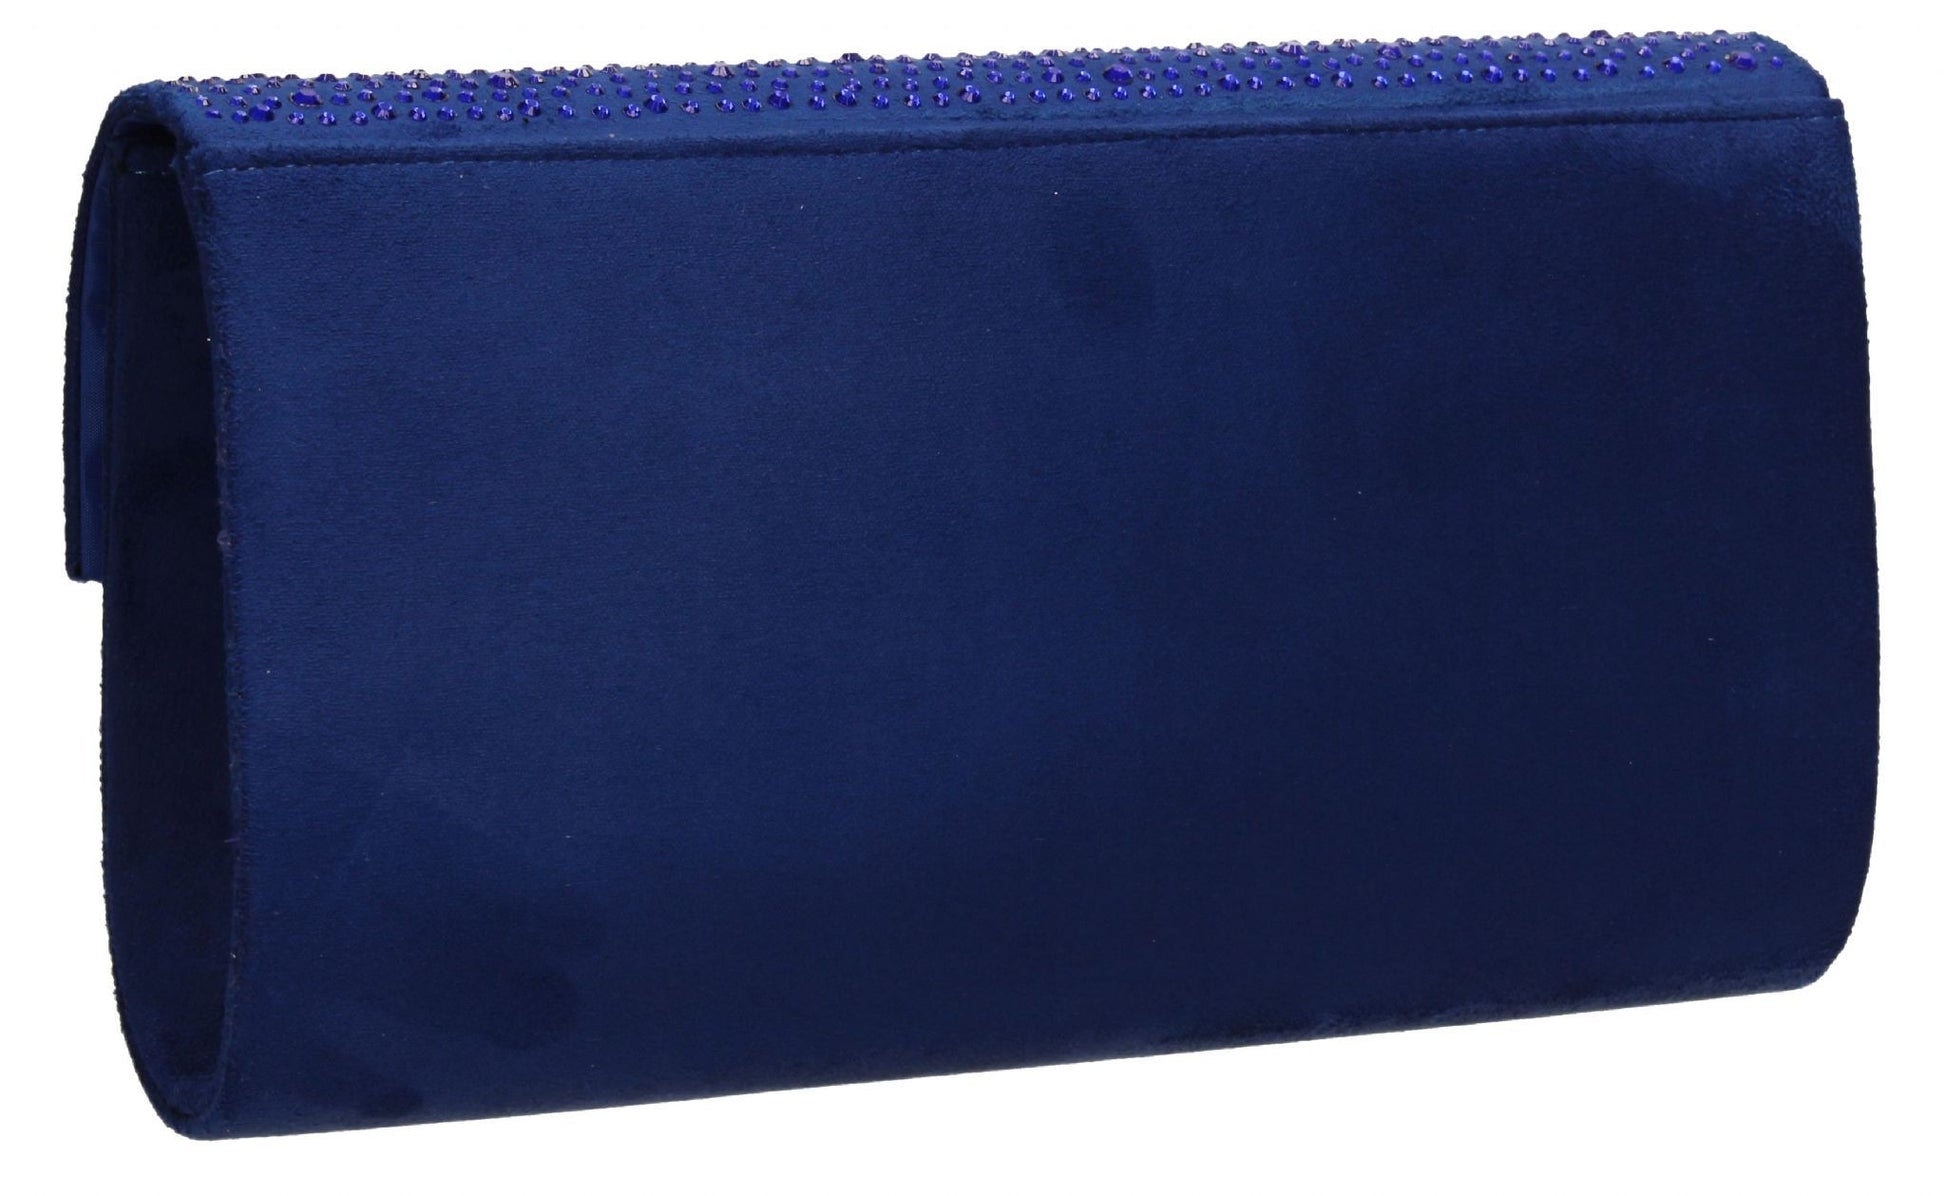 SWANKYSWANS Sandra Clutch Bag Royal Blue Cute Cheap Clutch Bag For Weddings School and Work